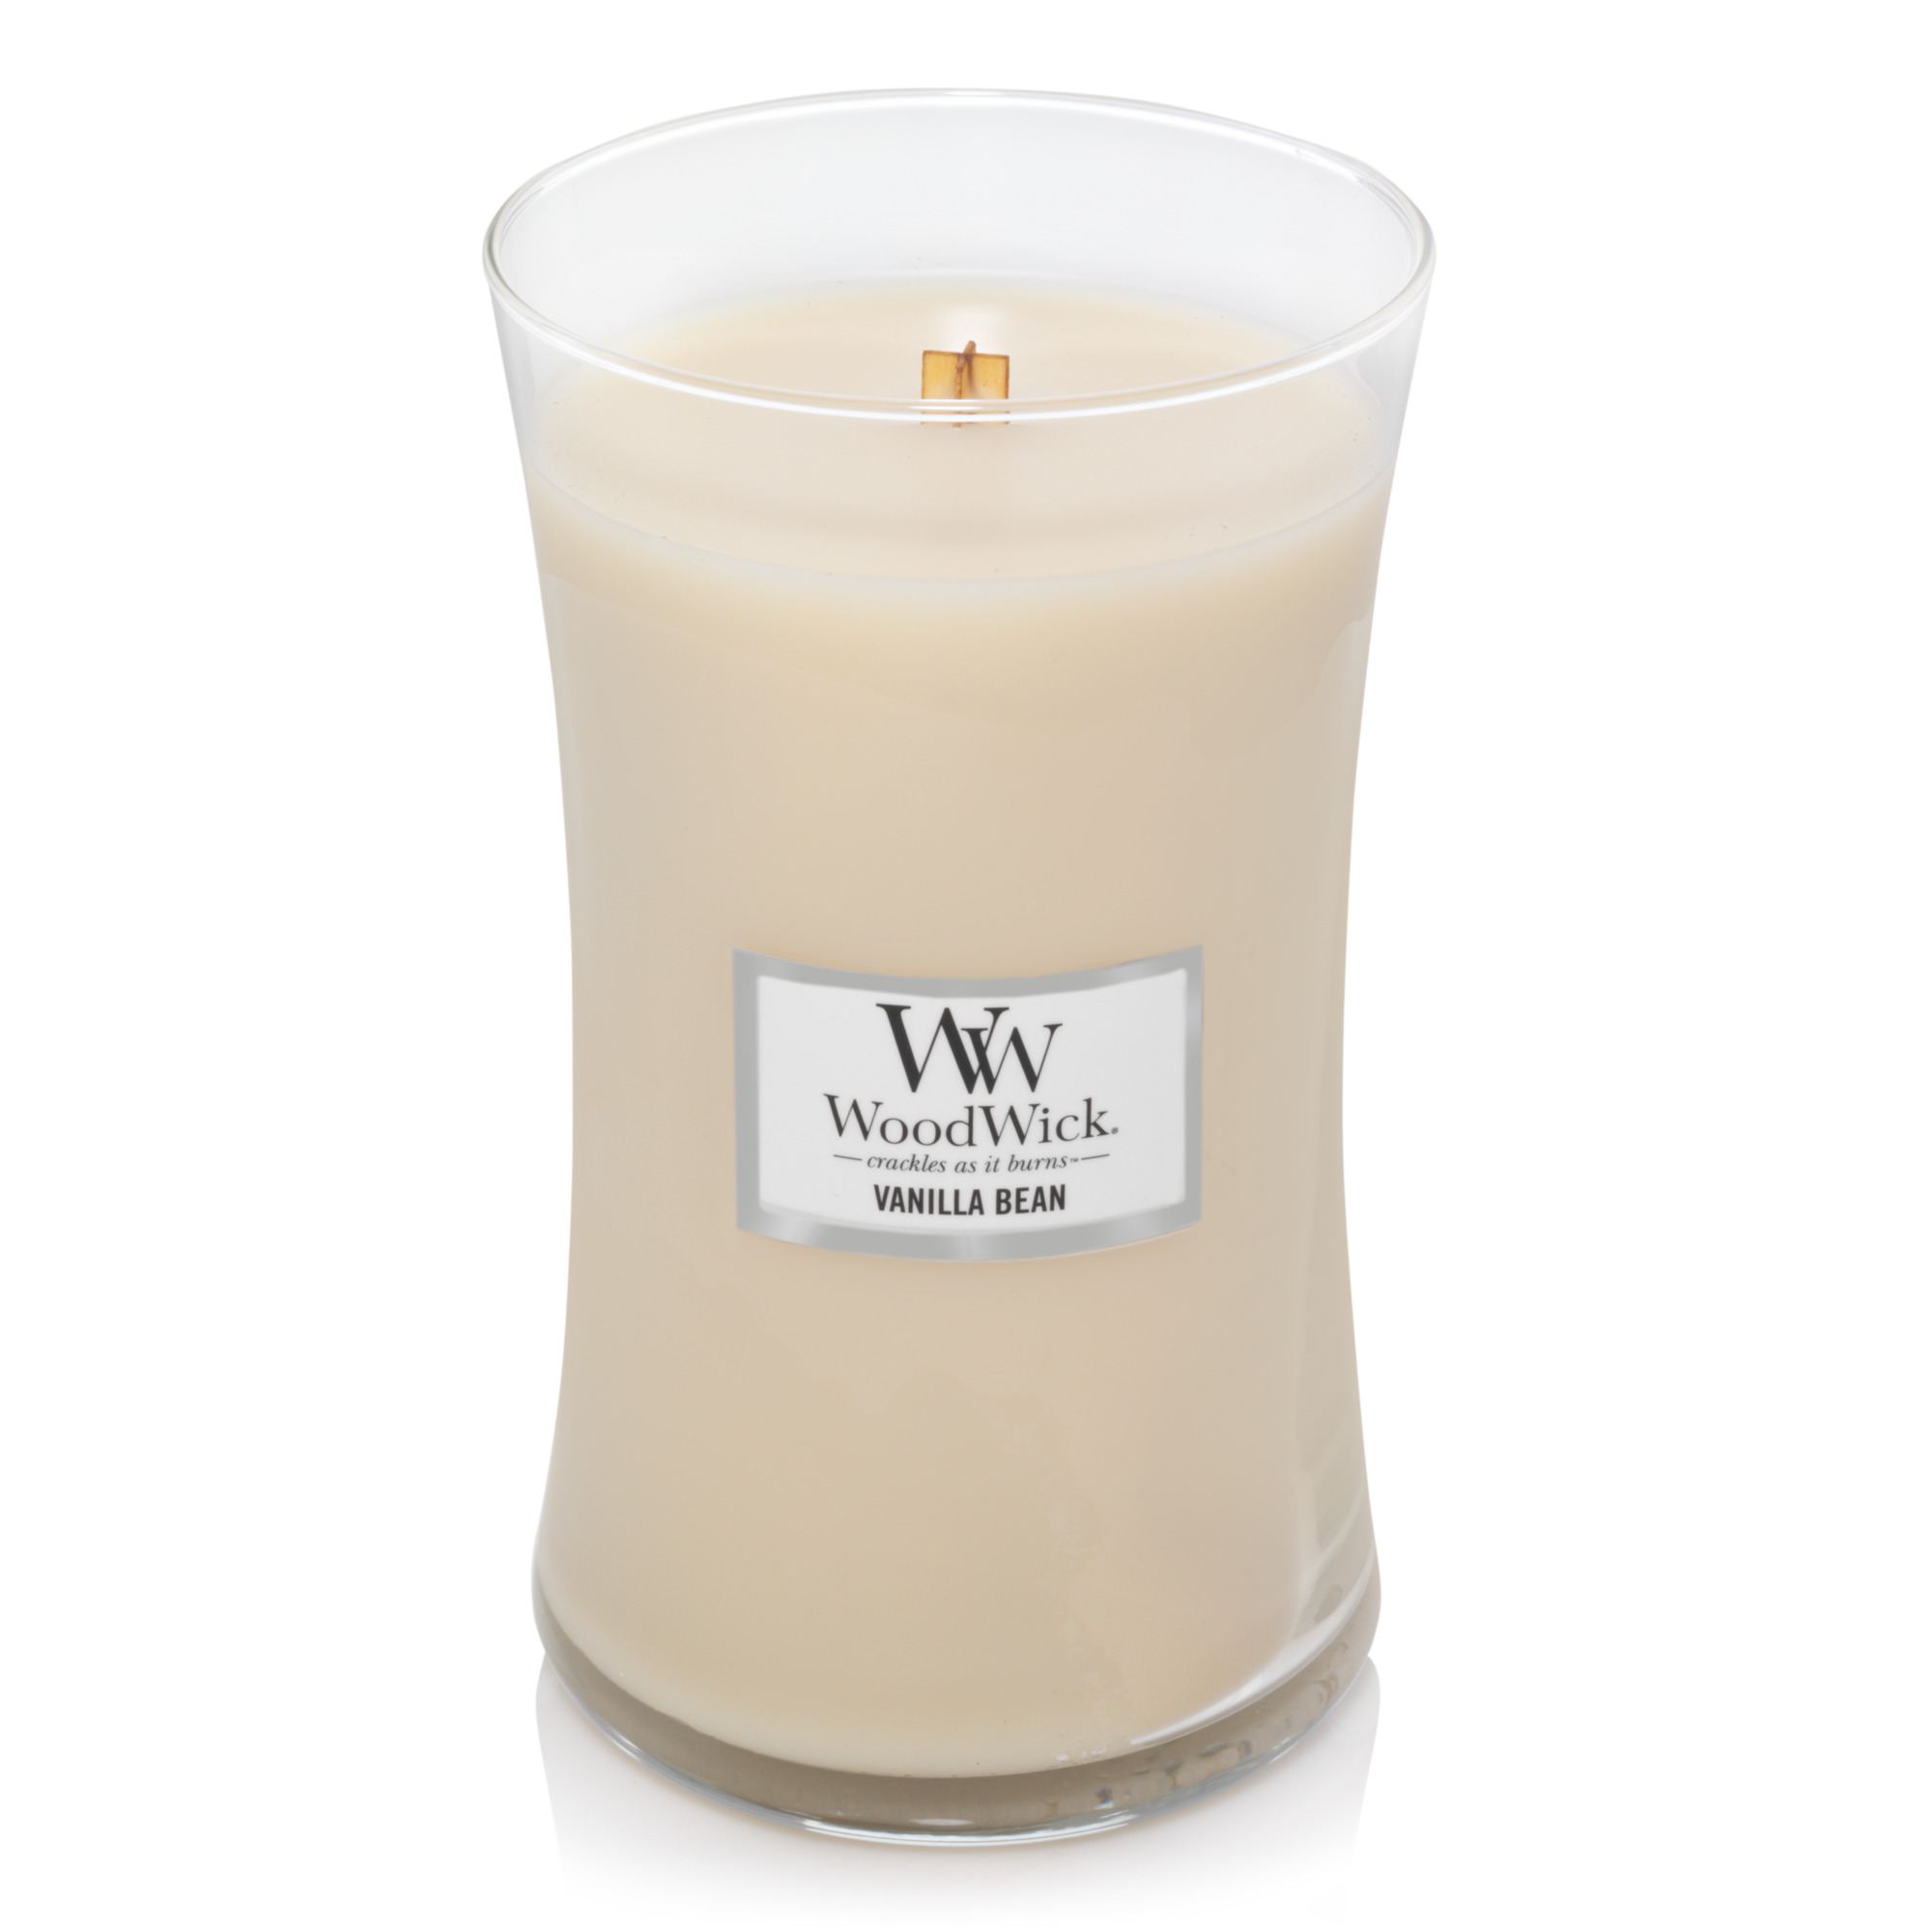 WoodWick Vanilla Bean - 22 oz. Candle - image 2 of 6